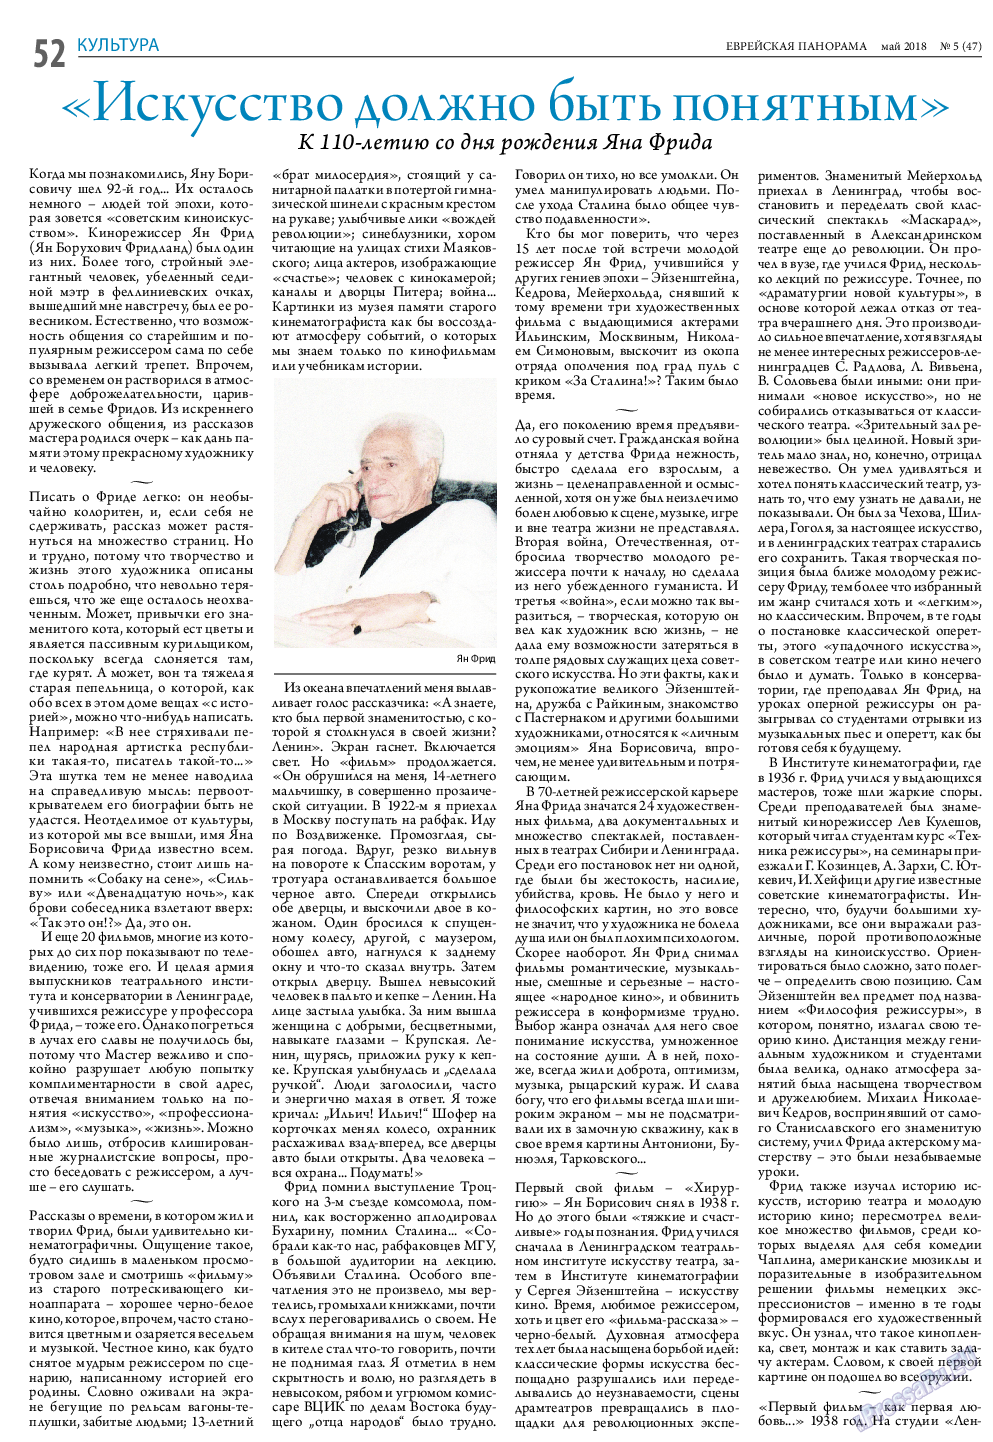 Еврейская панорама, газета. 2018 №5 стр.52